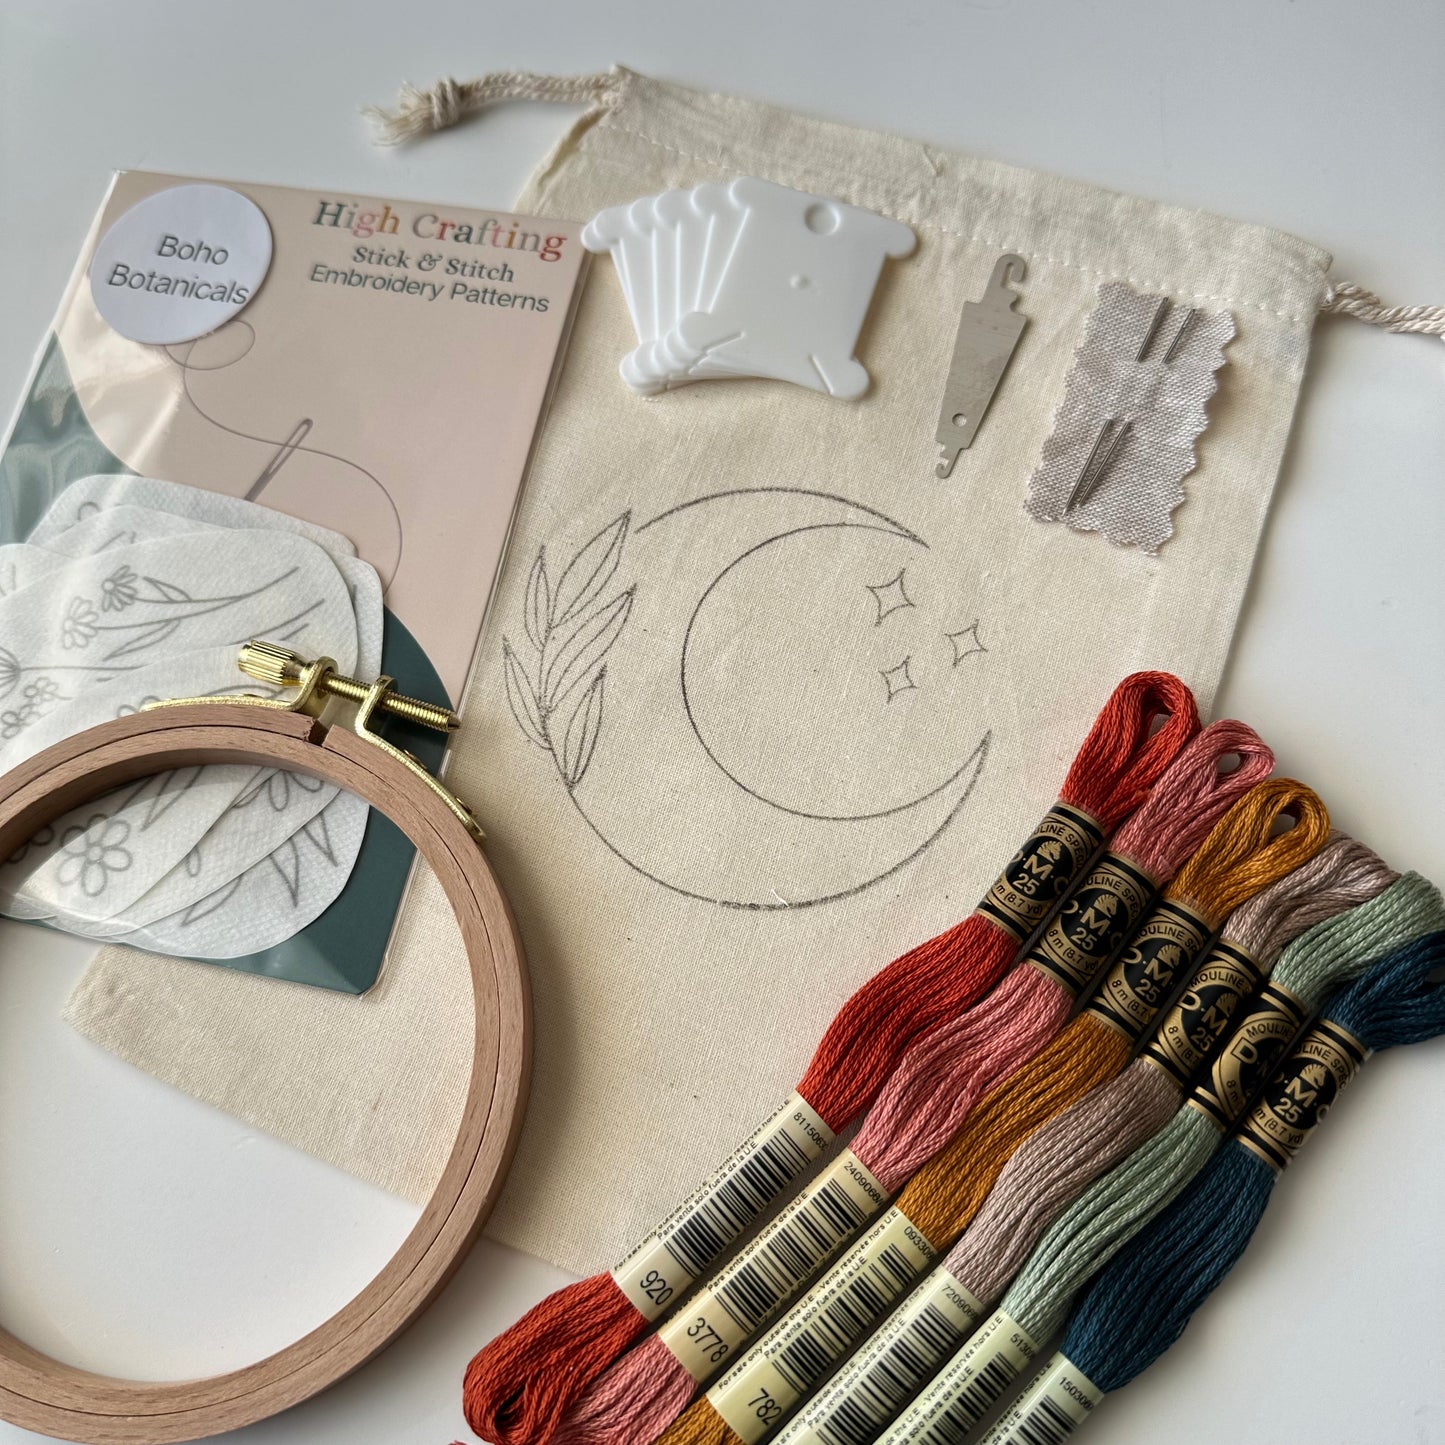 Stick & Stitch Embroidery Kit – High Crafting